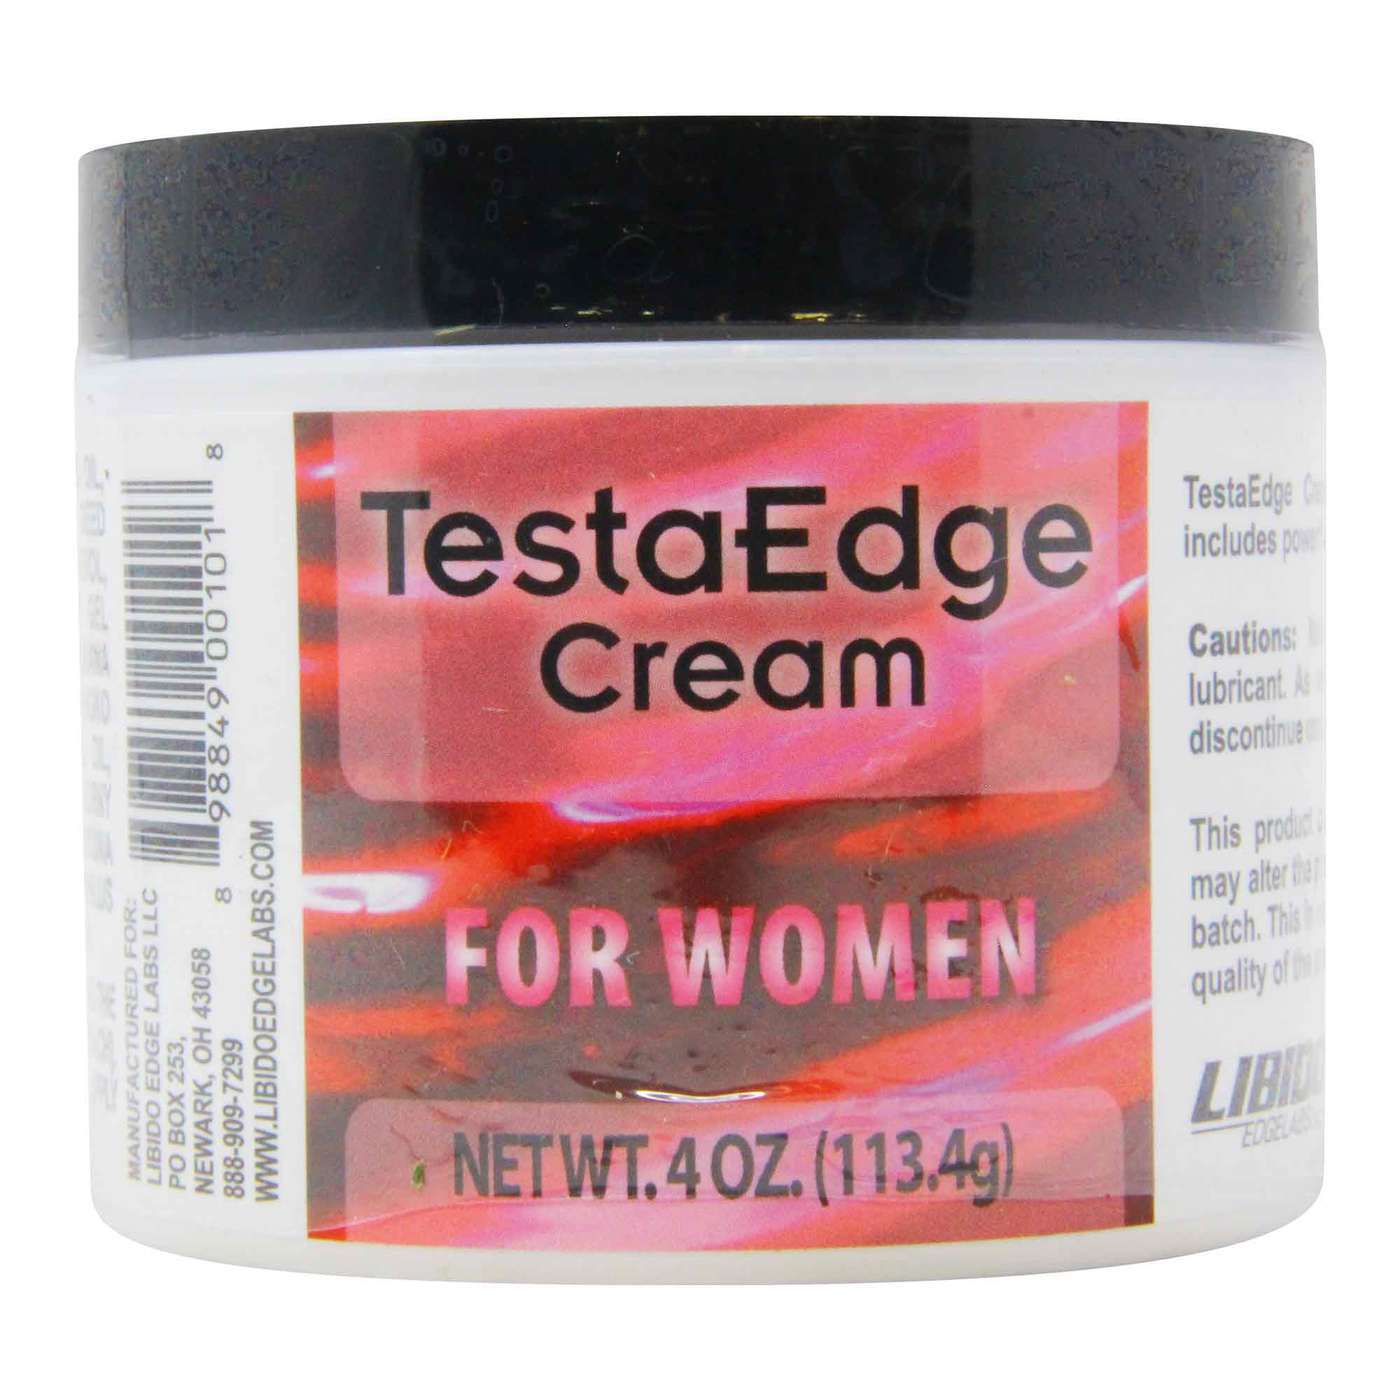 Testosterone Creams To Boost Women's Libido